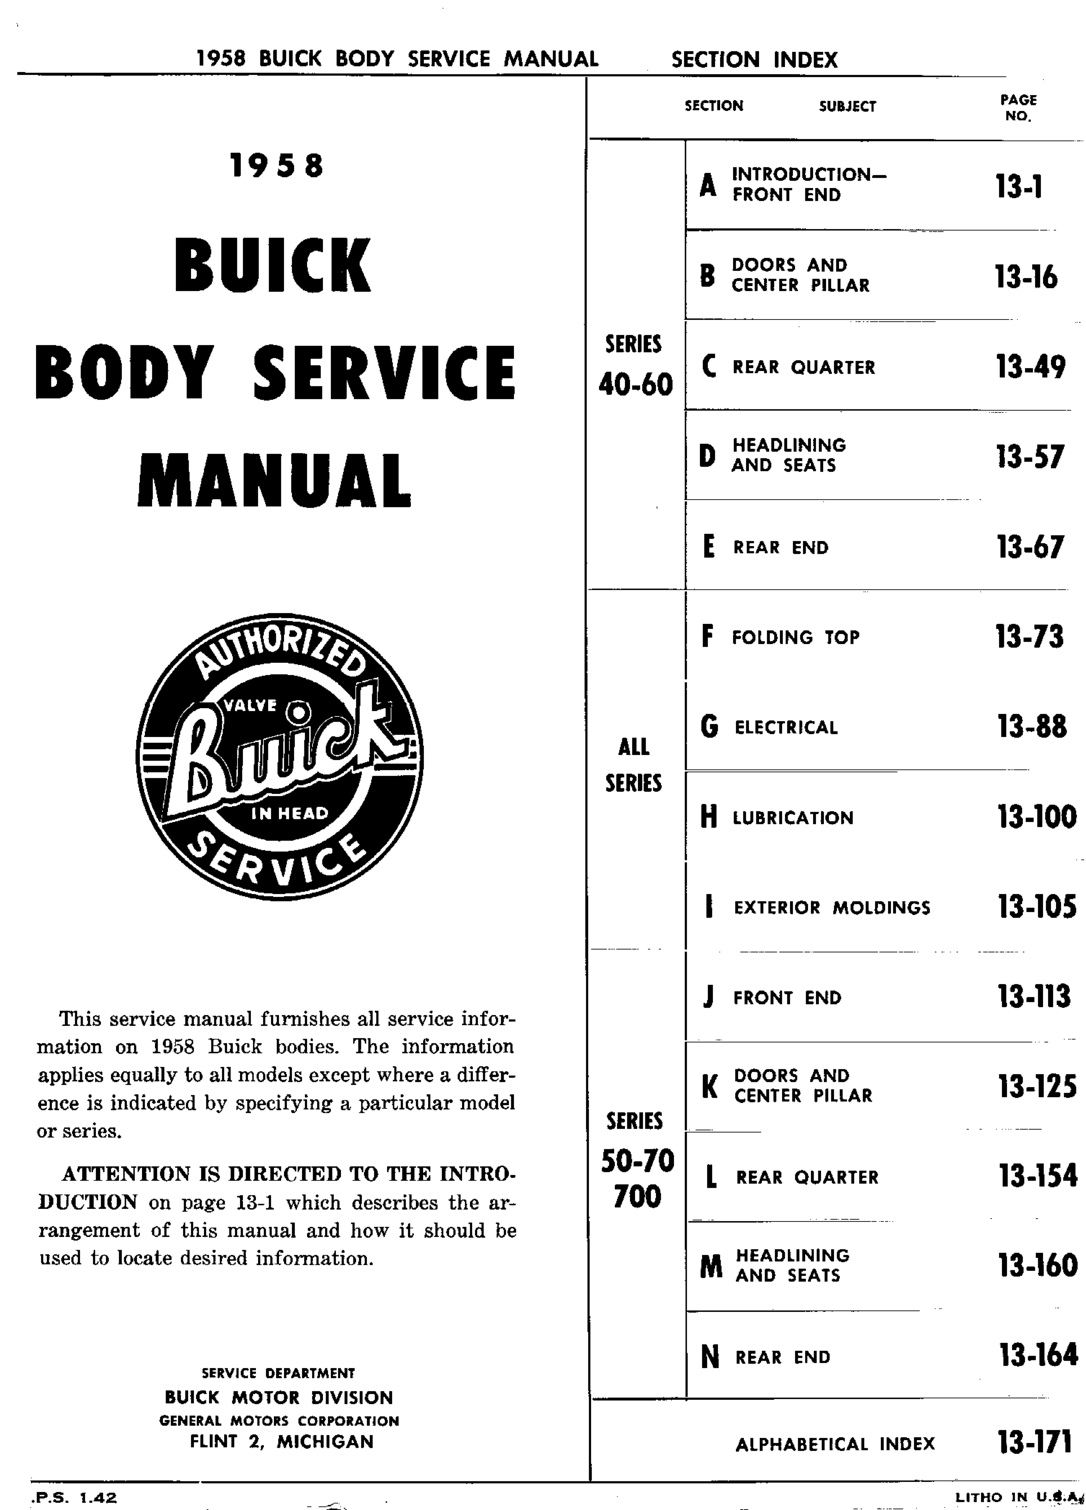 n_1958 Buick Body Service Manual-001-001.jpg